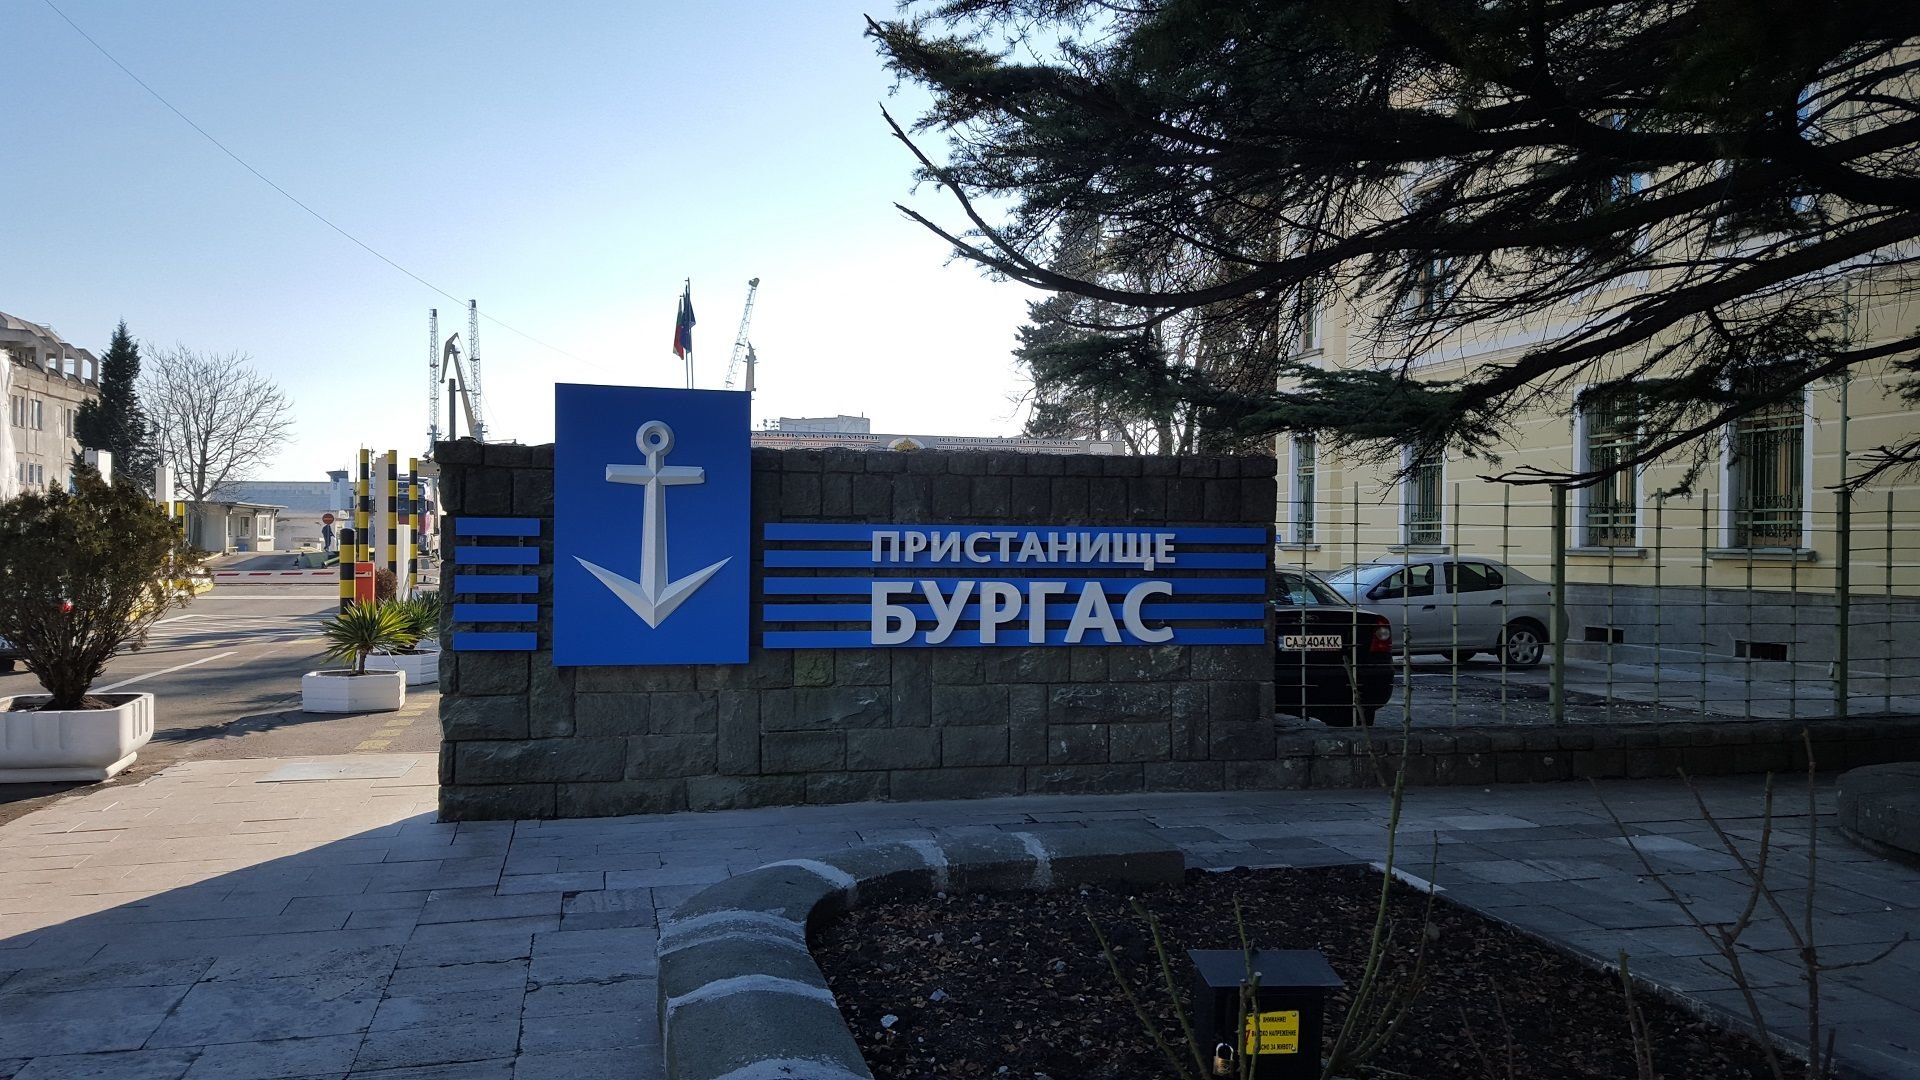 Епидемичен взрив от COVID 19 на кораб на пристанище Бургас установиха здравните